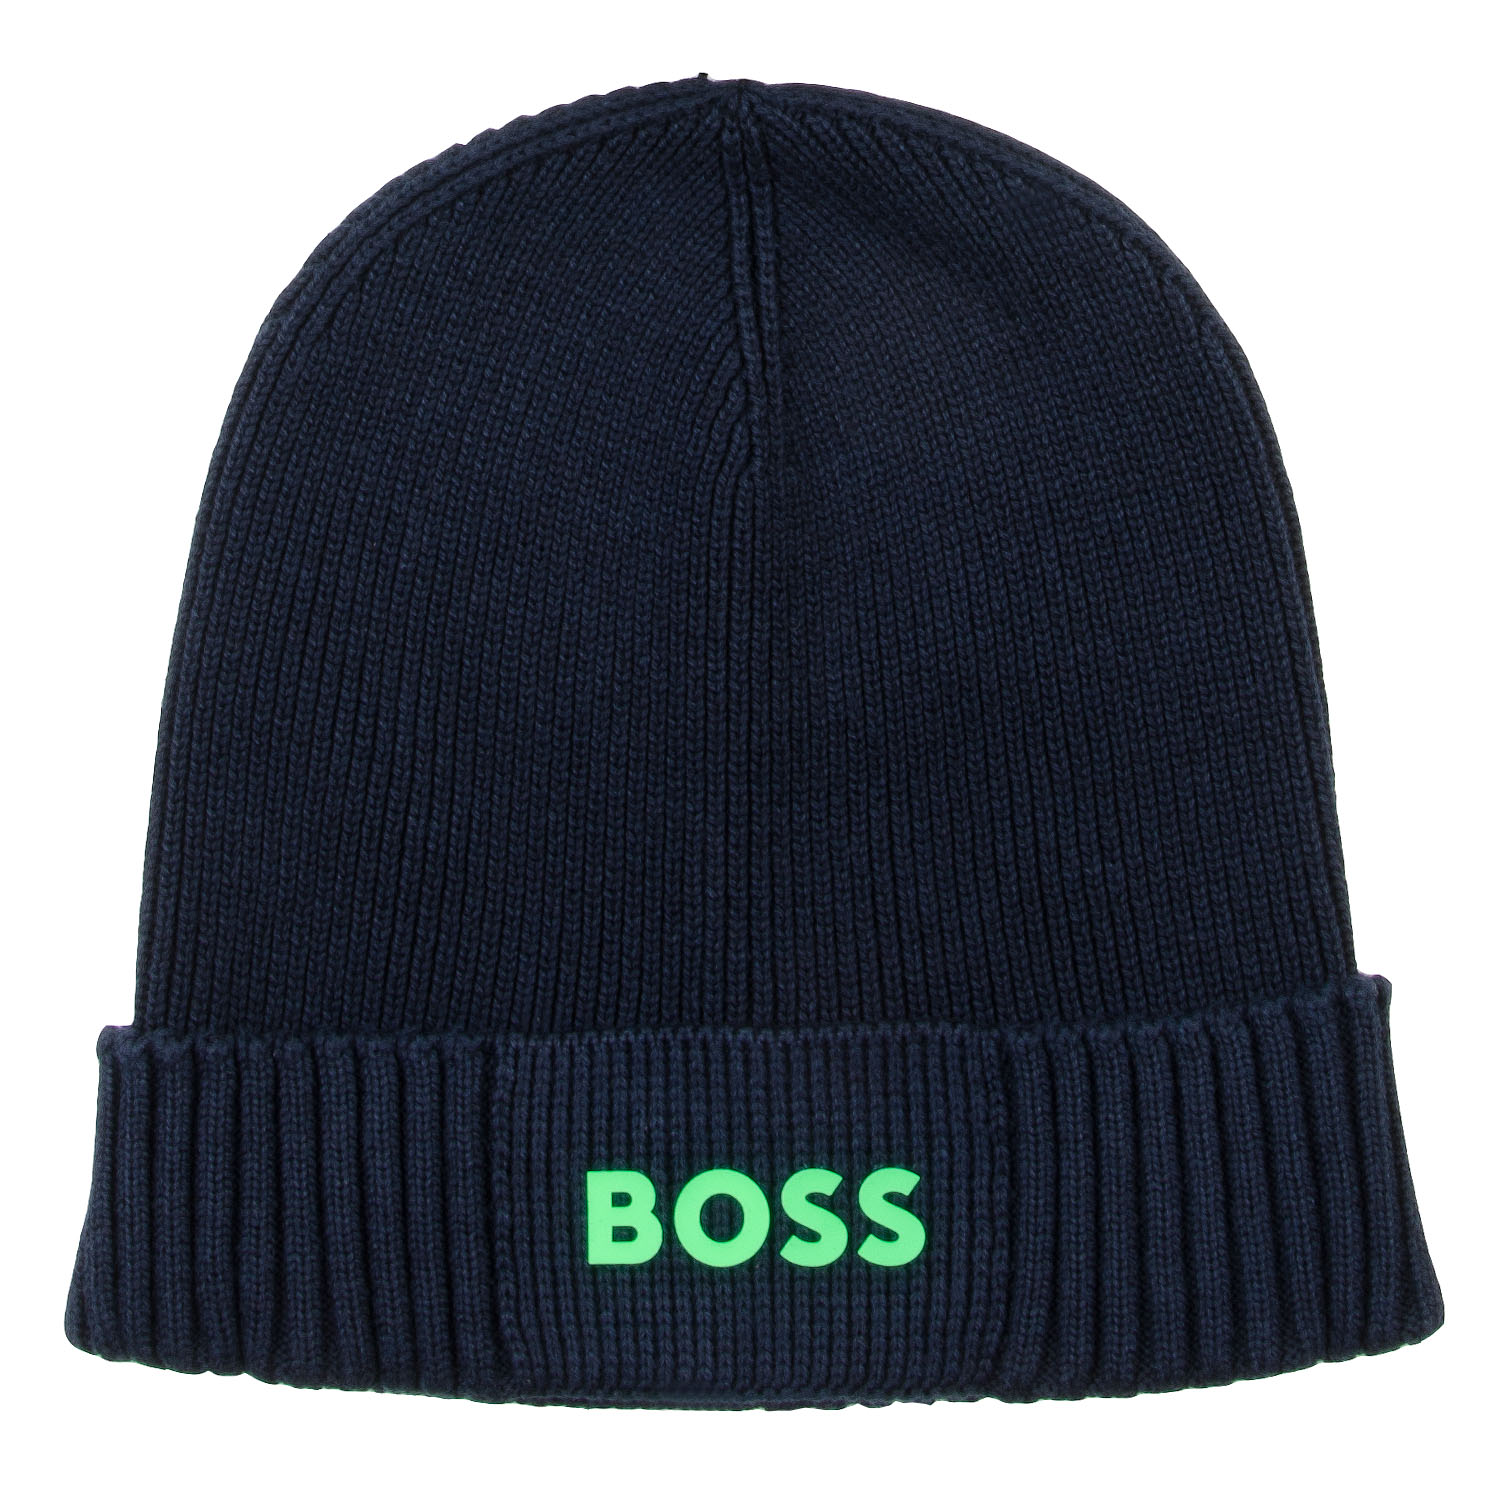 BOSS Asic Beanie Hat